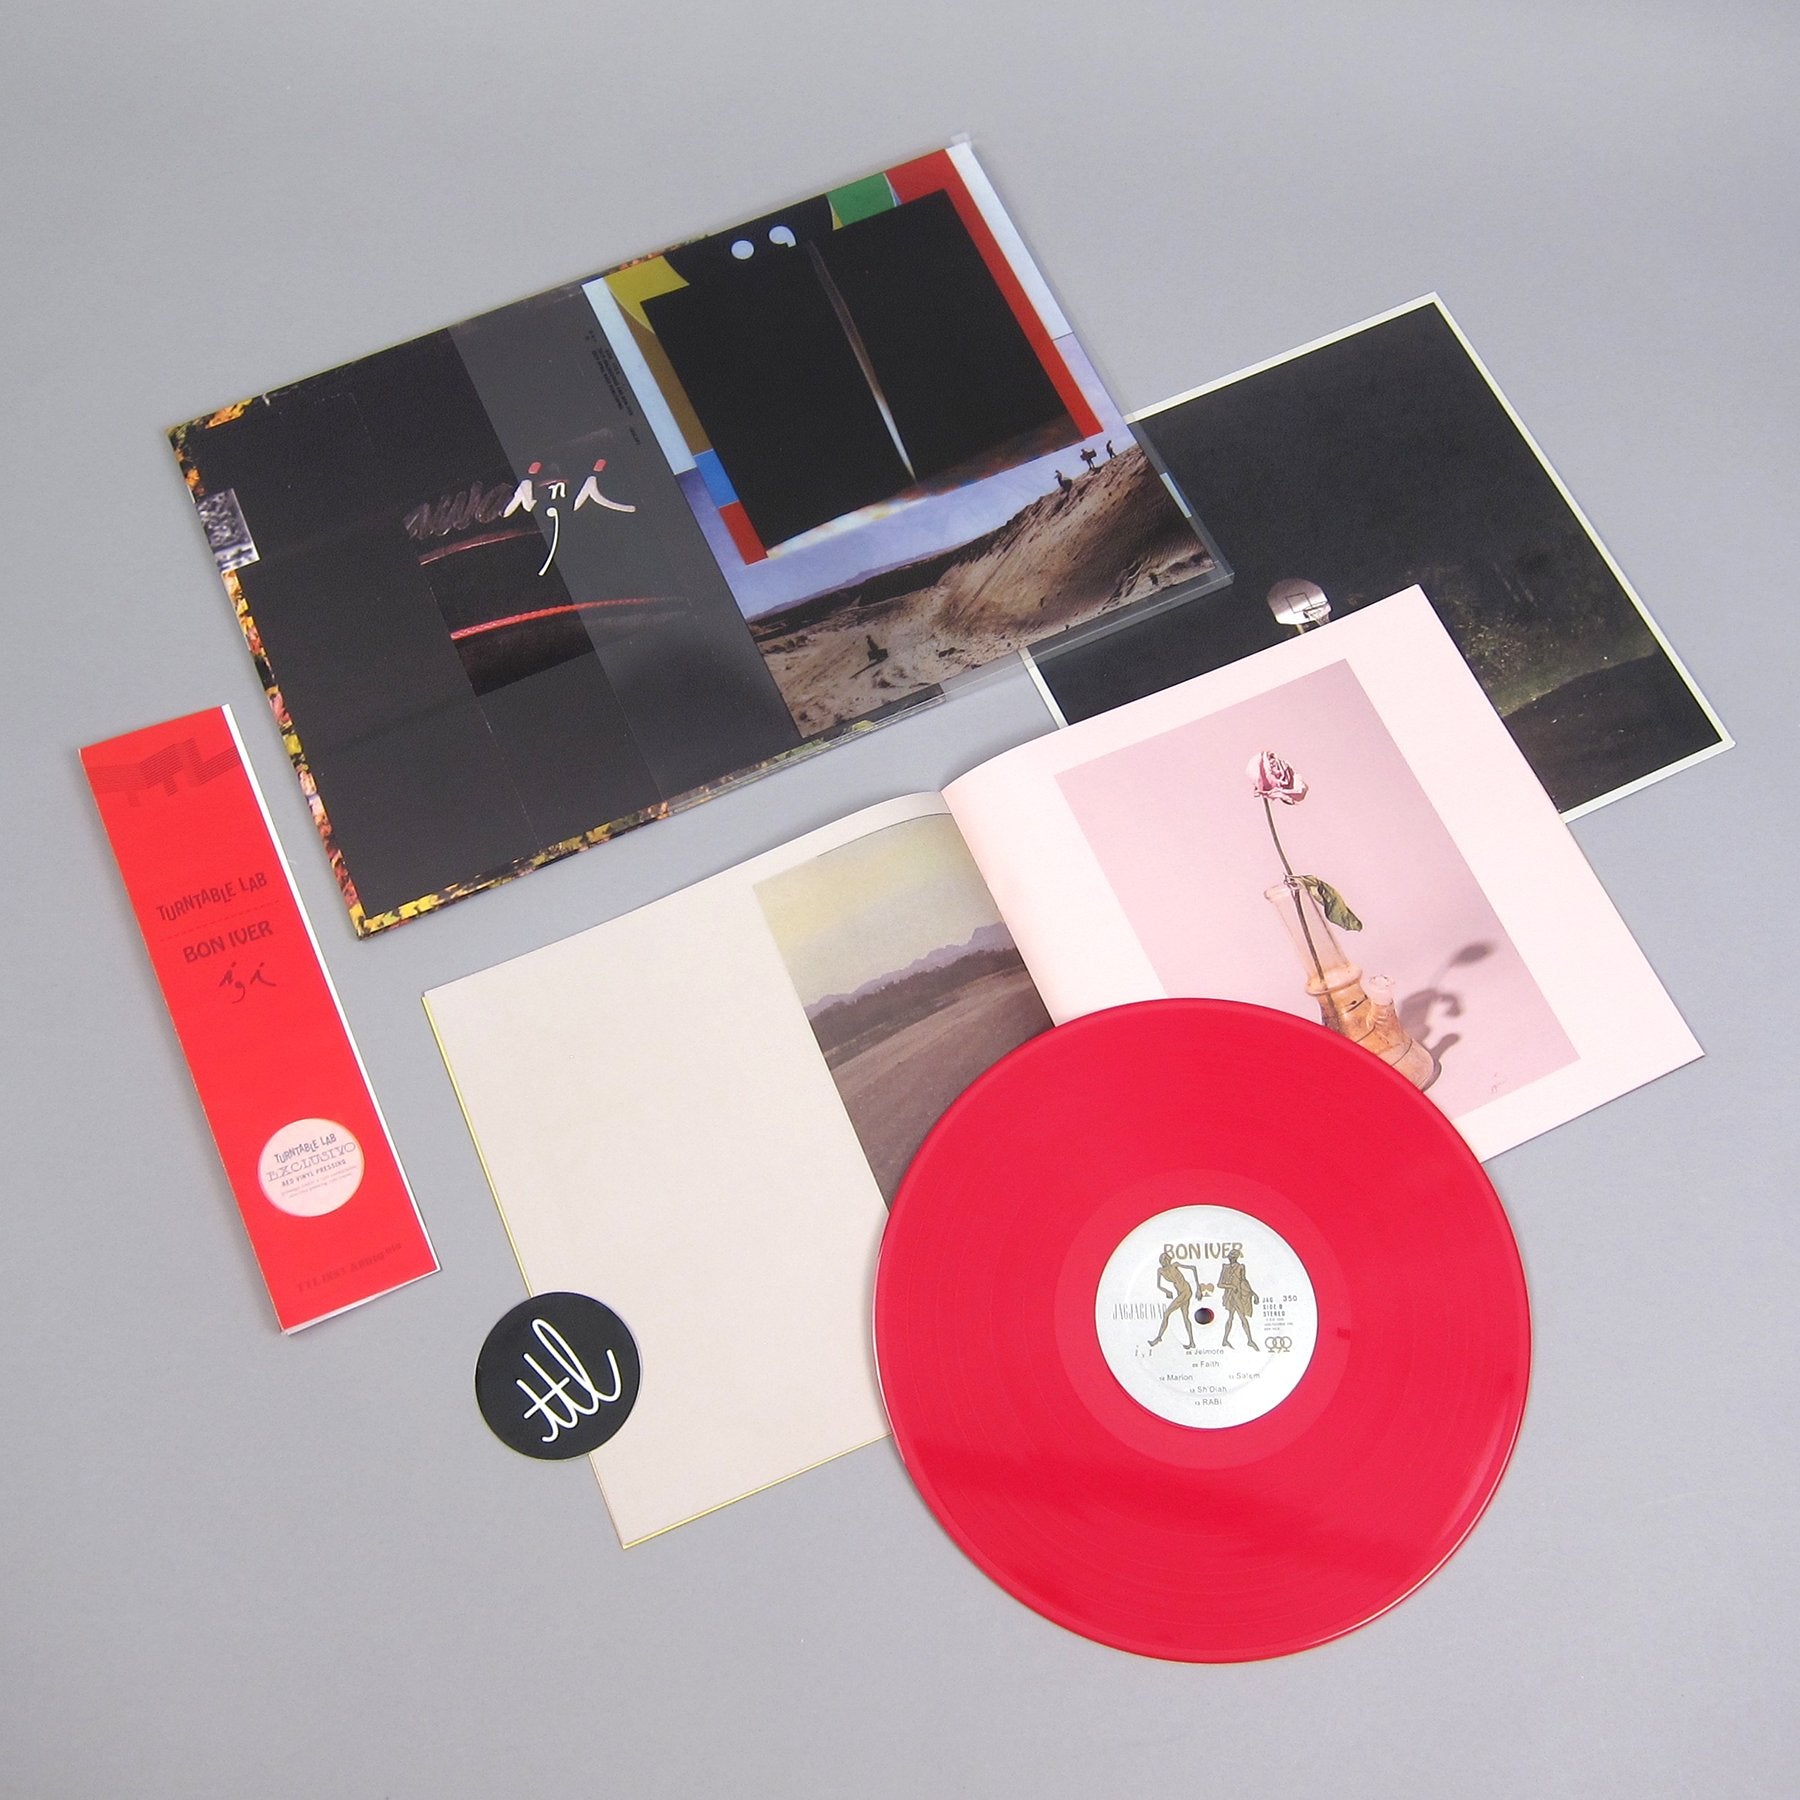 Bon Iver: i,i (Red Colored Vinyl) Vinyl LP - Turntable Lab Exclusive